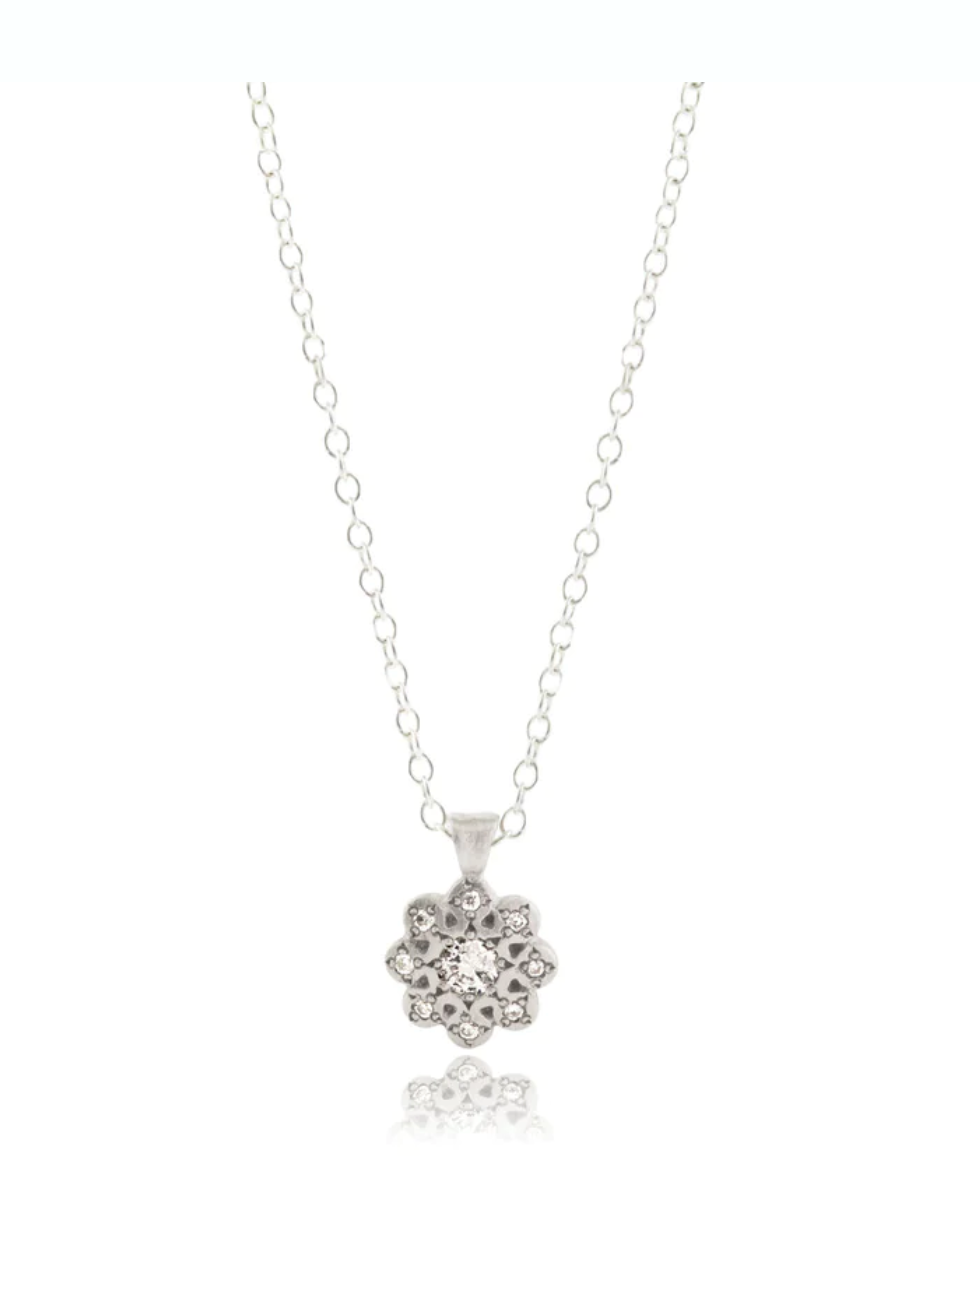 Moonflower Charm Pendant with Diamond